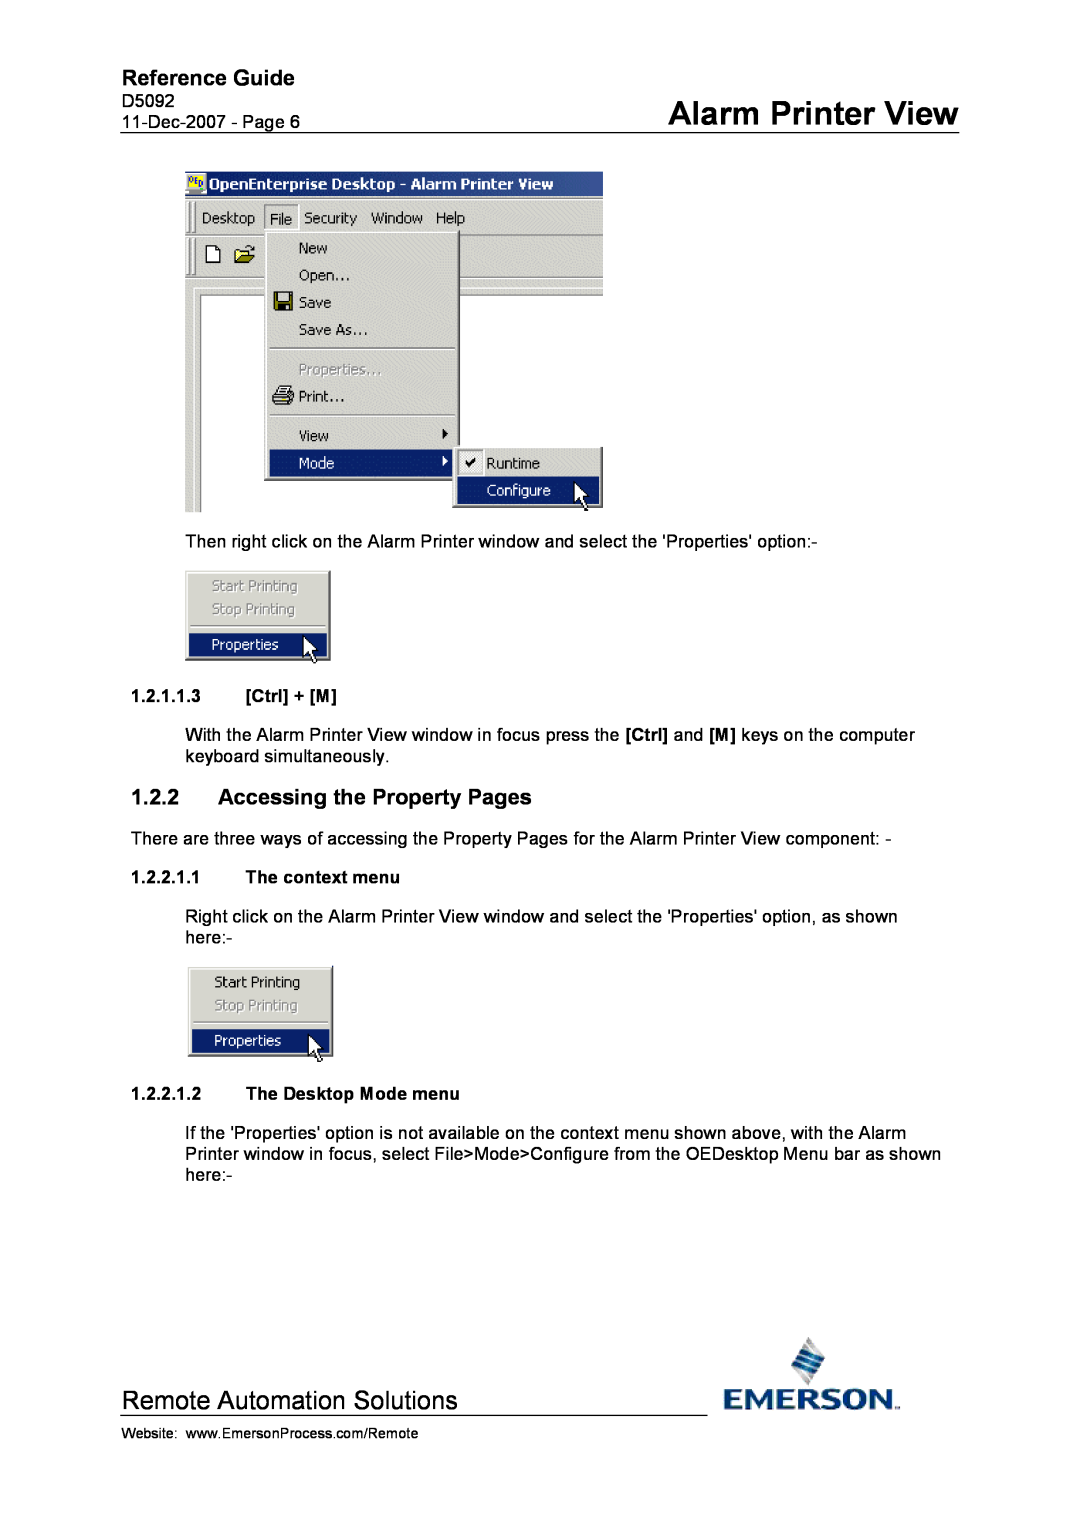 Emerson Process Management D5092 manual Accessing the Property Pages, Ctrl + M, The context menu, The Desktop Mode menu 